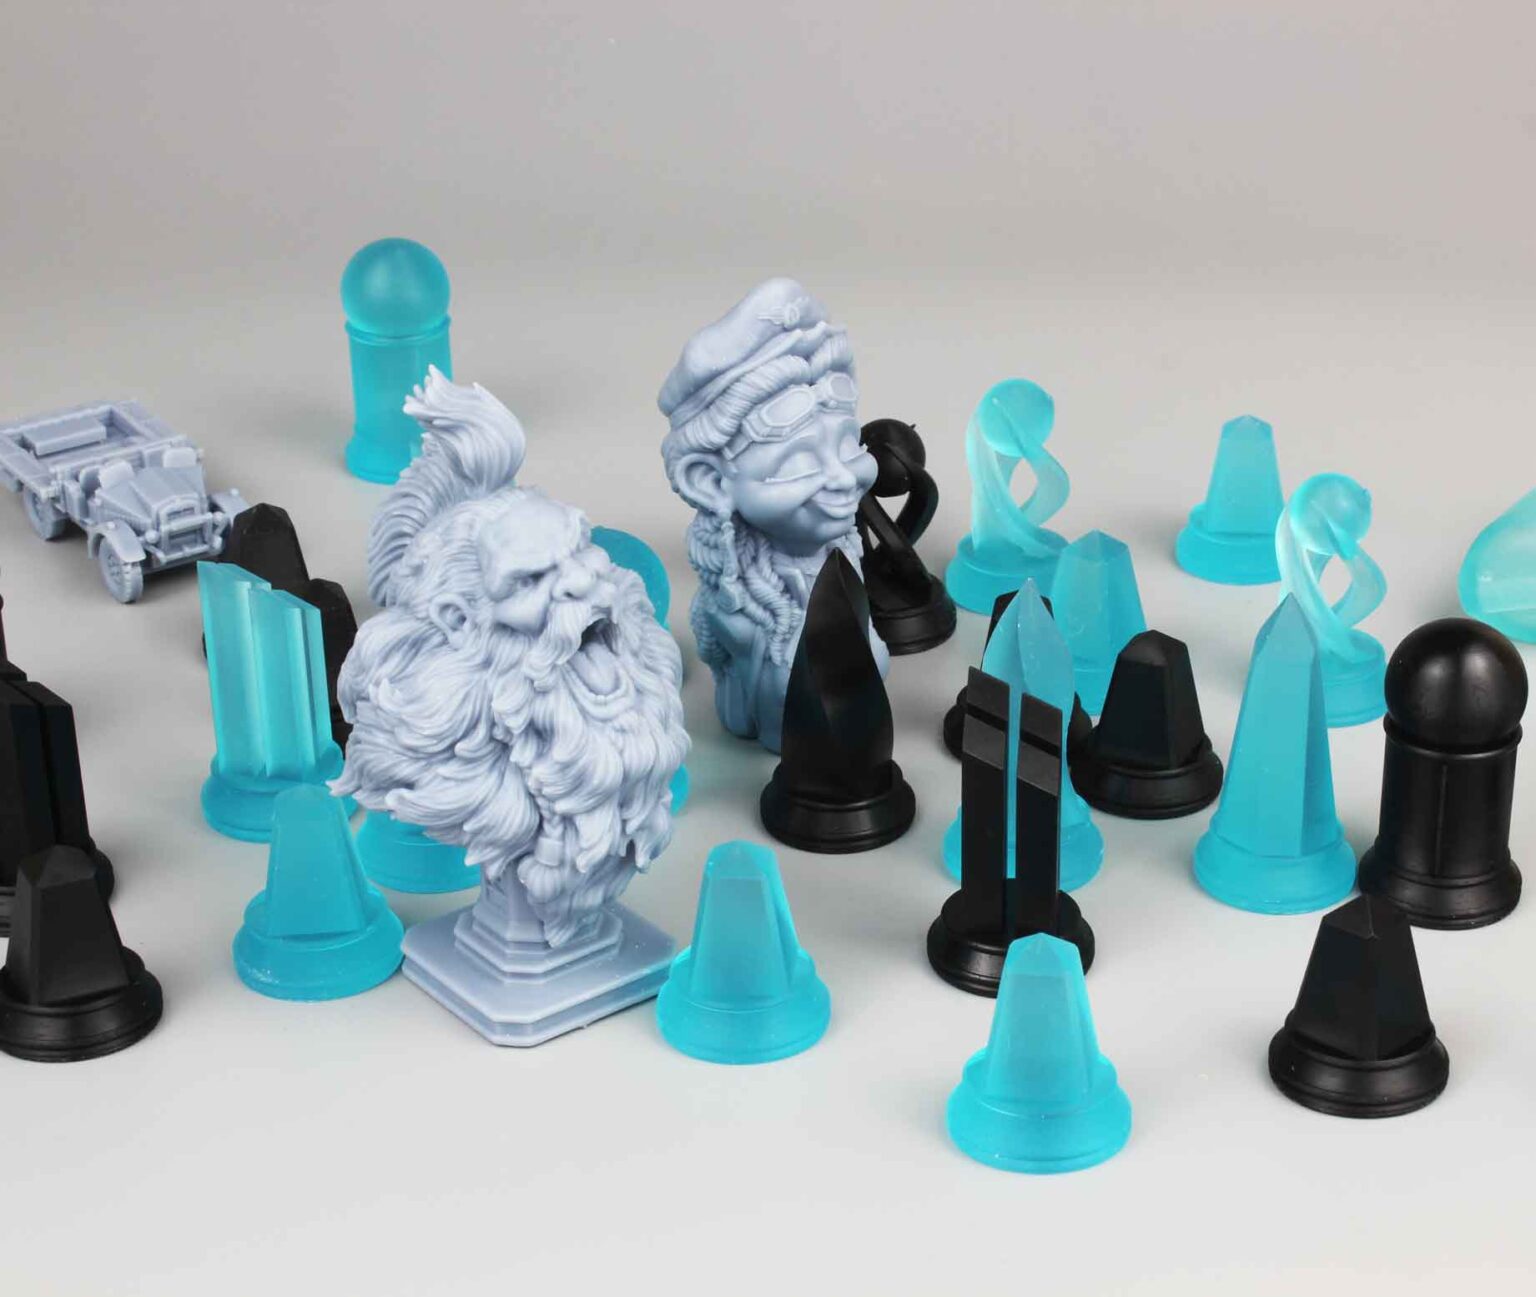 Resin 3D Printing Service UK Based | Microworkshops